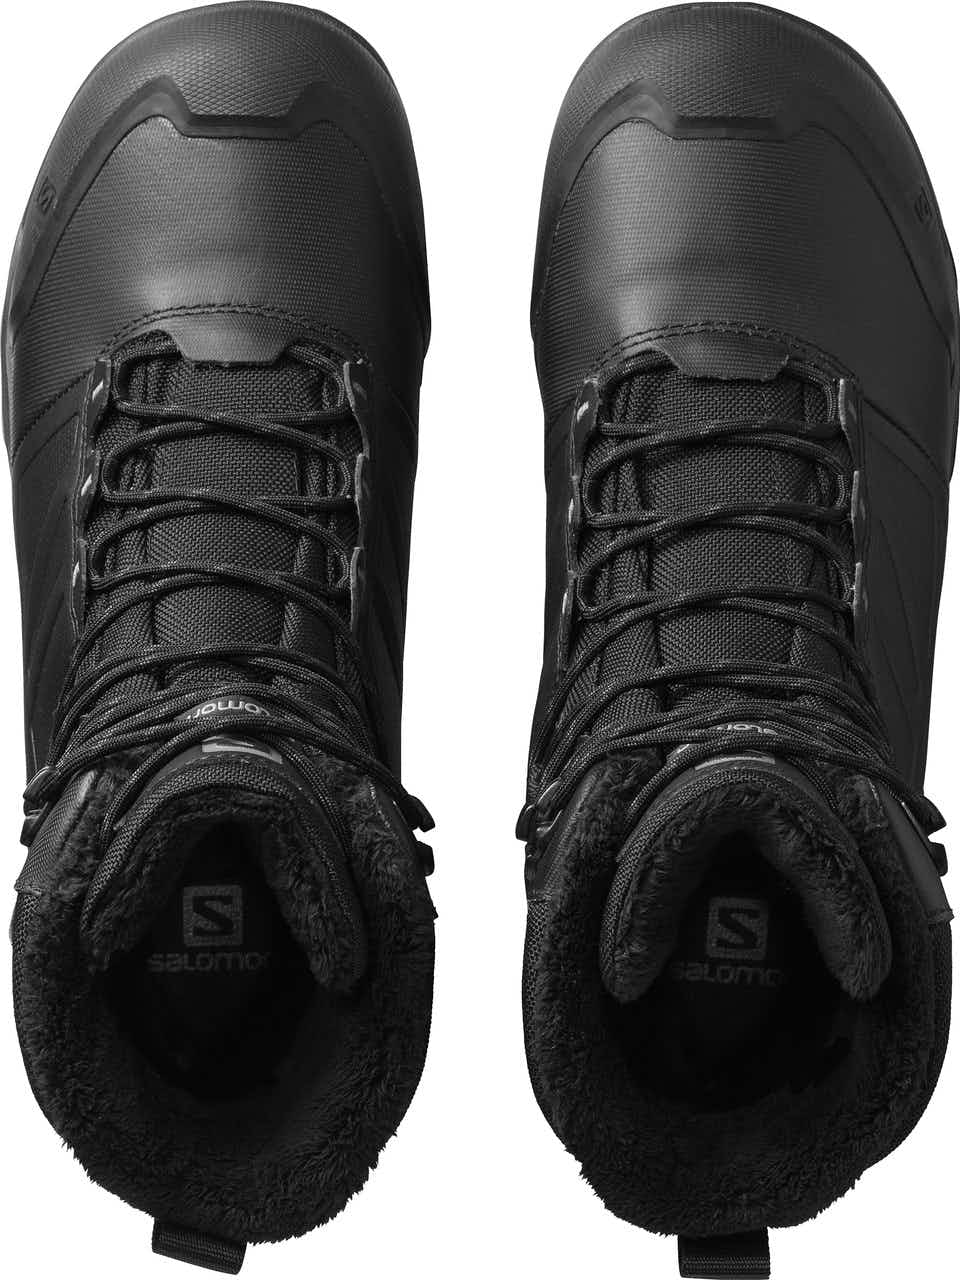 Toundra Pro CS Waterproof Winter Boots Black/Black/Magnet